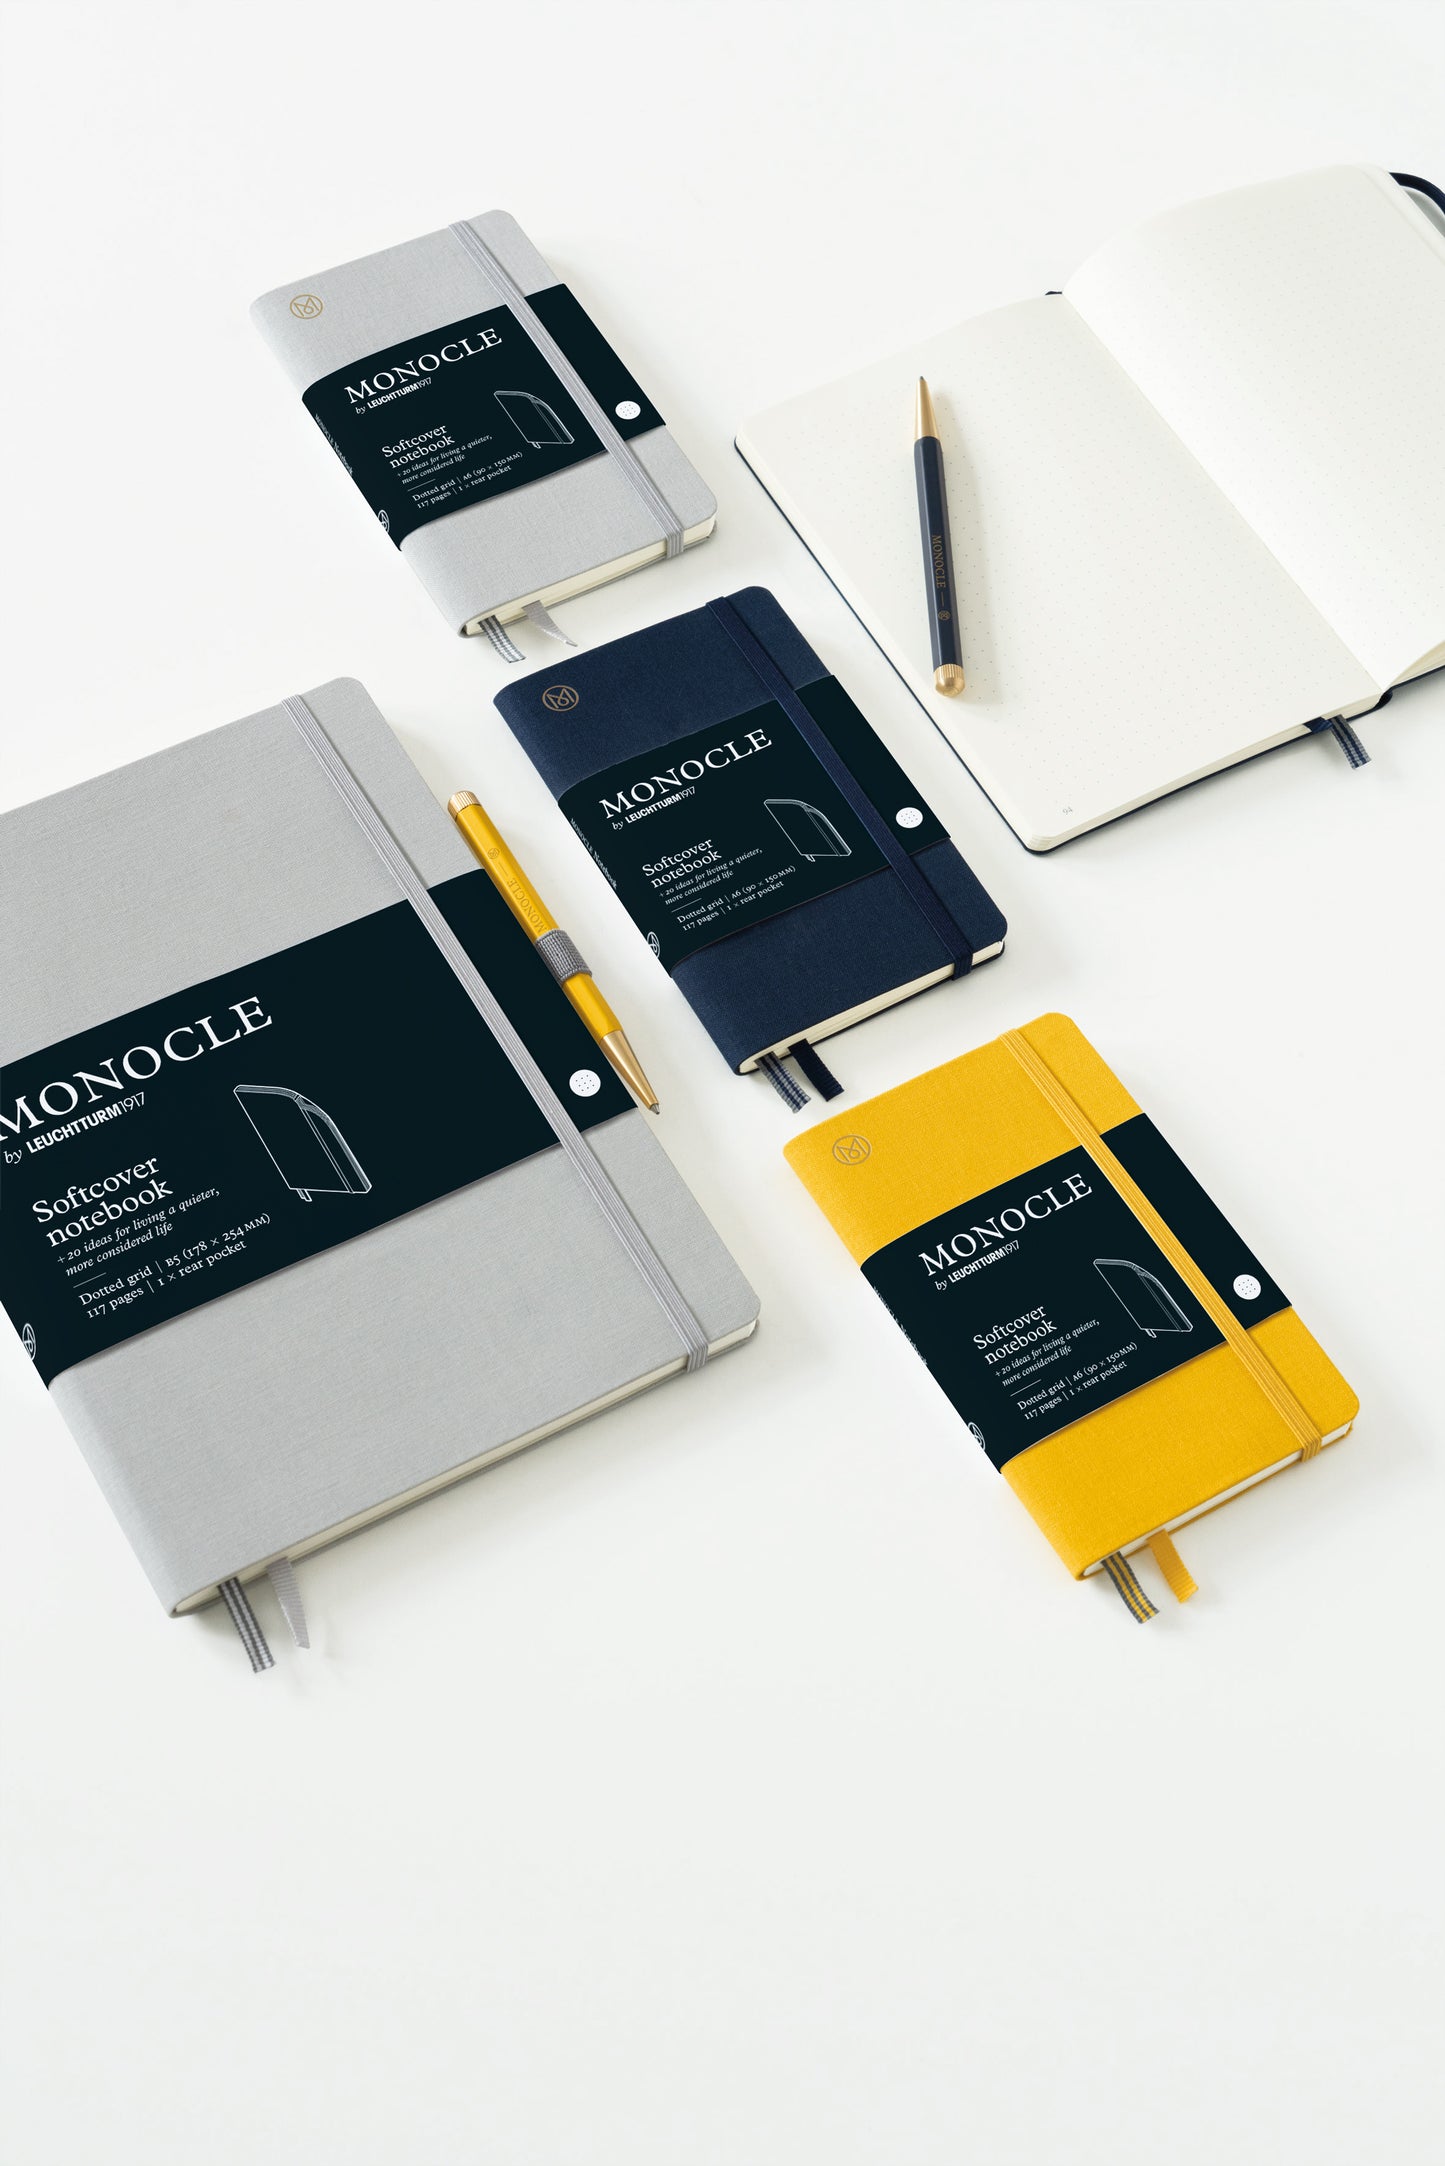 Monocle Hardcover Notebook B6 - Light Grey